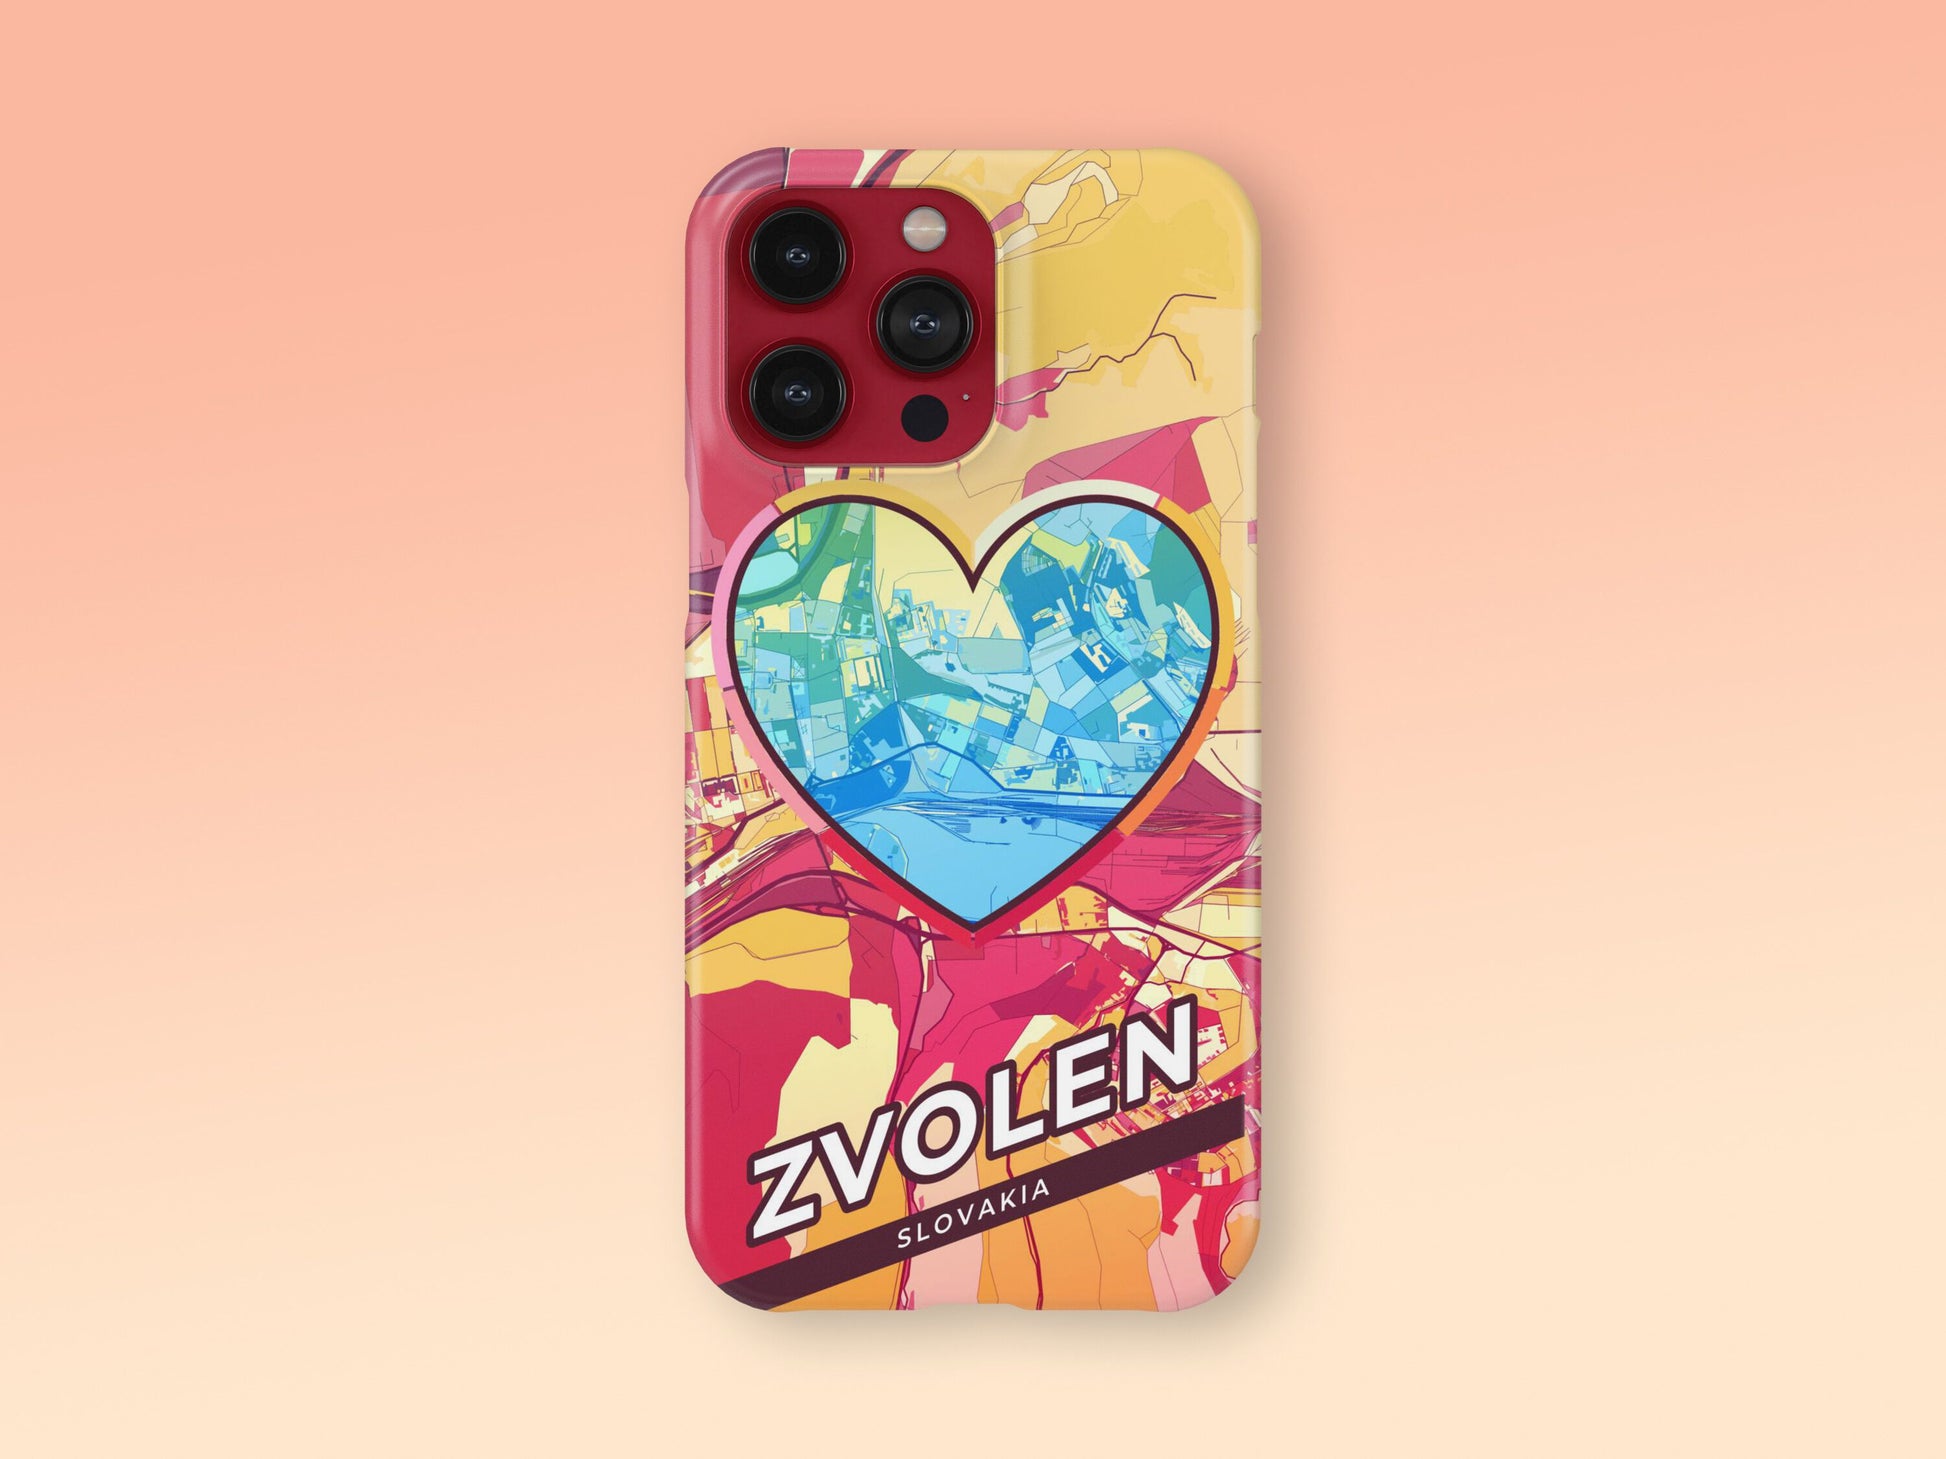 Zvolen Slovakia slim phone case with colorful icon 2